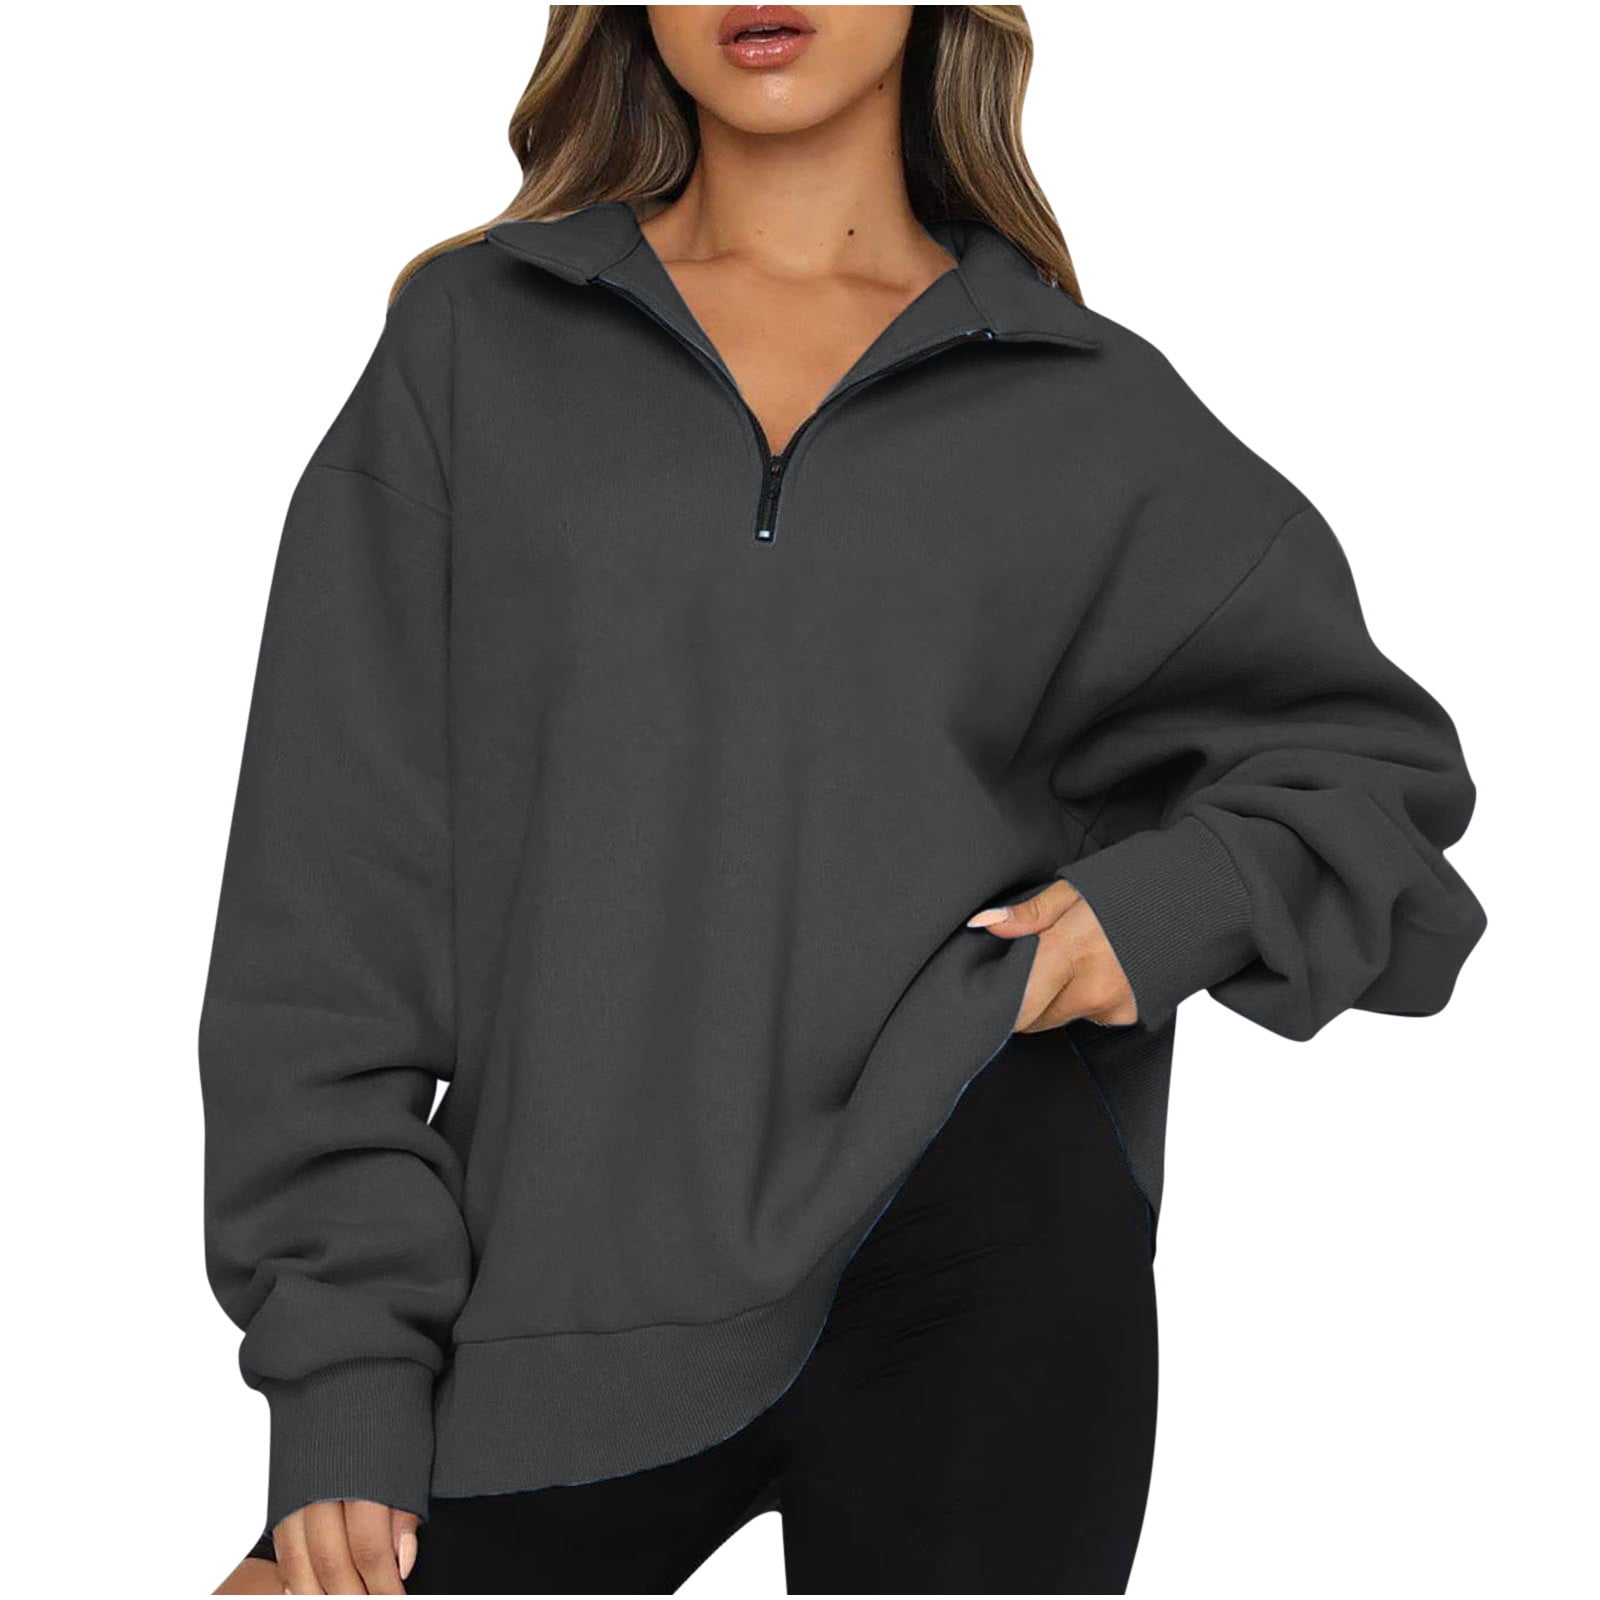 Yyeselk Casual Womens Zipper Pullover Sweatshirts Oversized Fleece